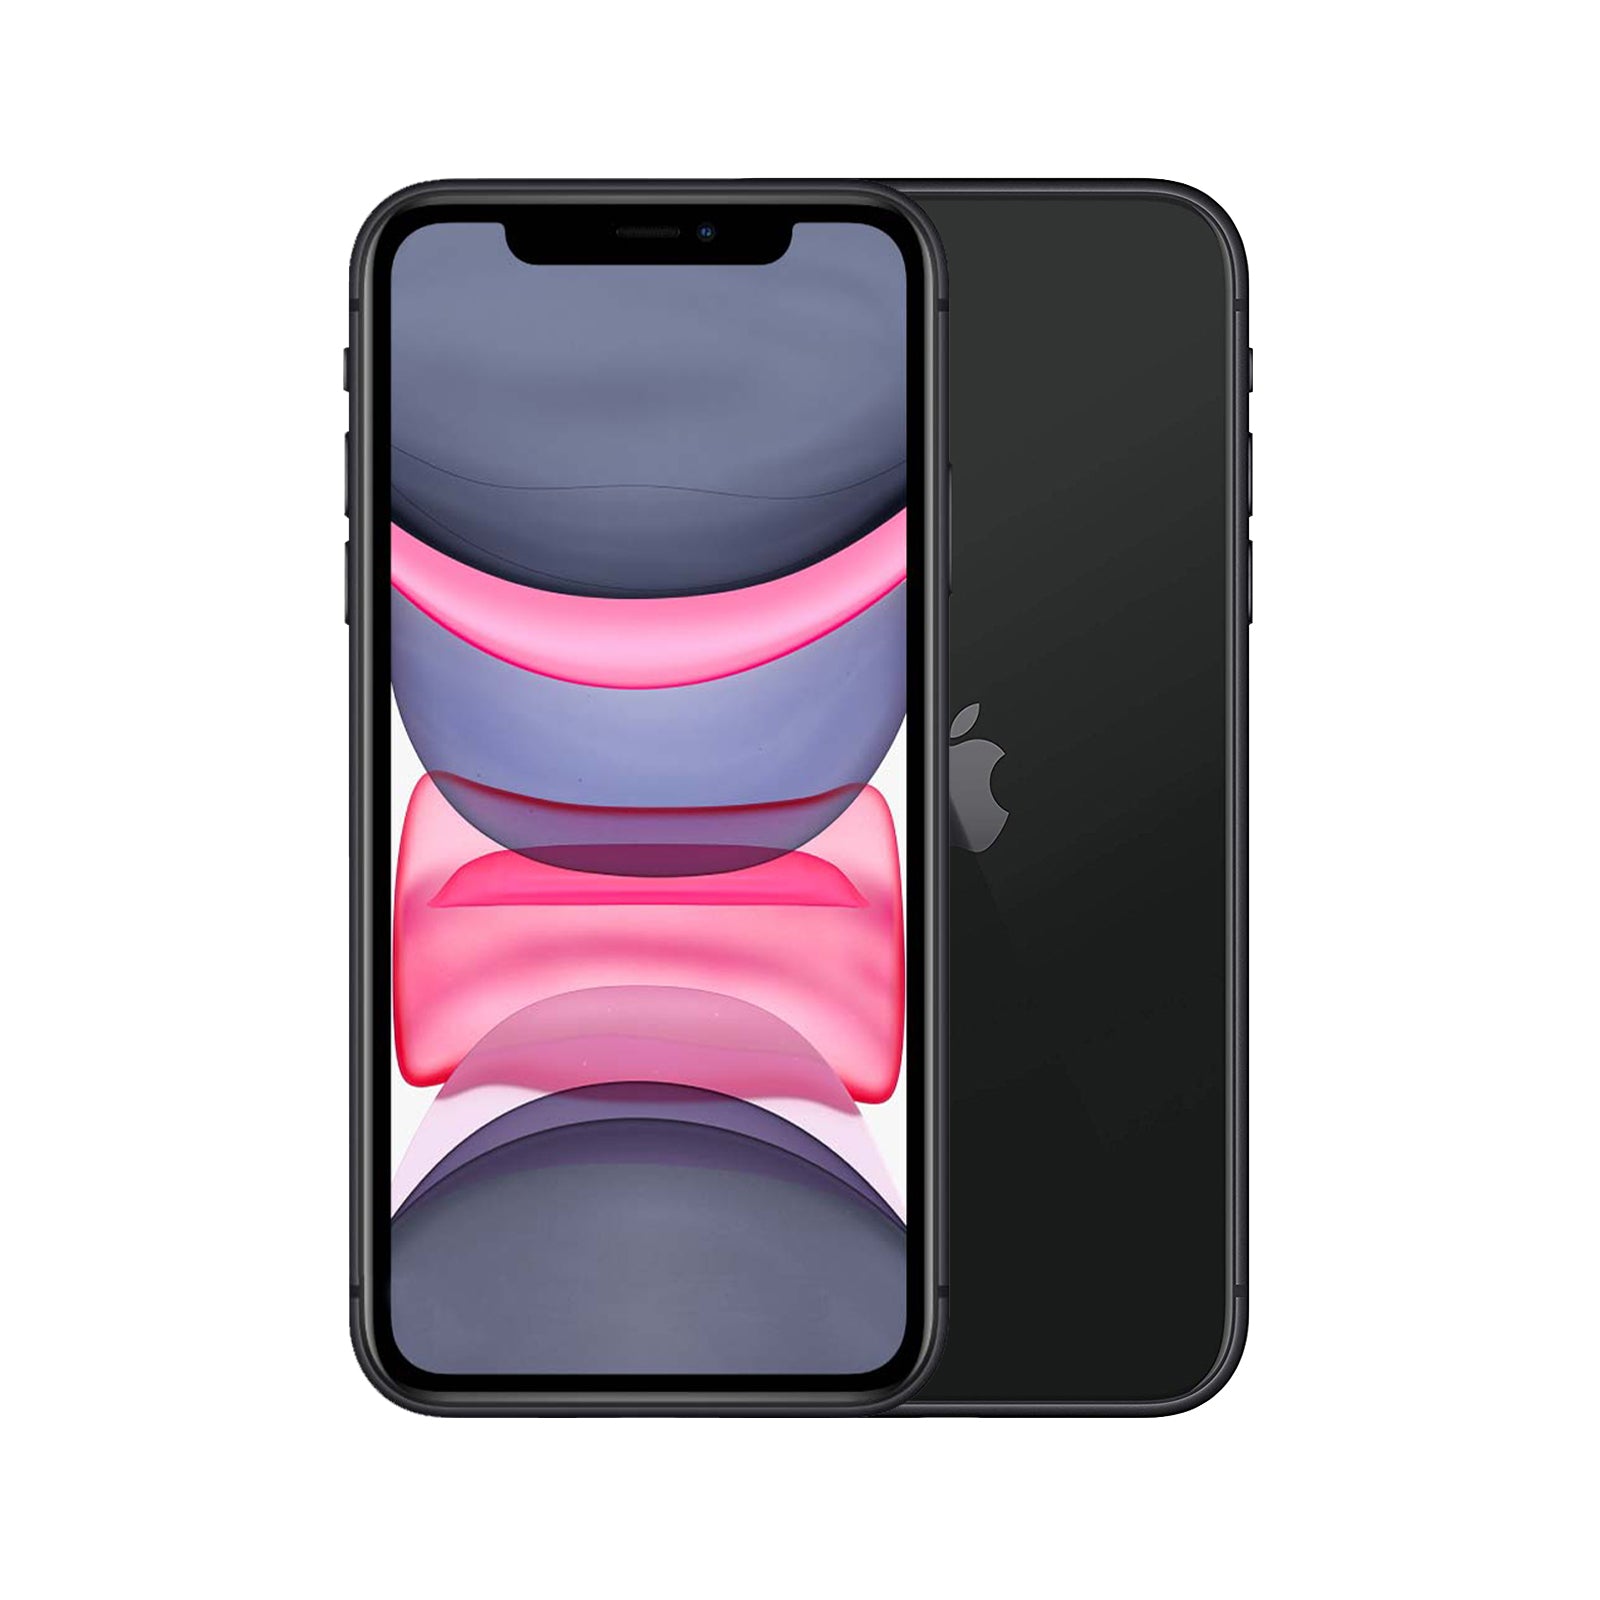 Apple iPhone 11 128GB Black - Excellent Refurbished